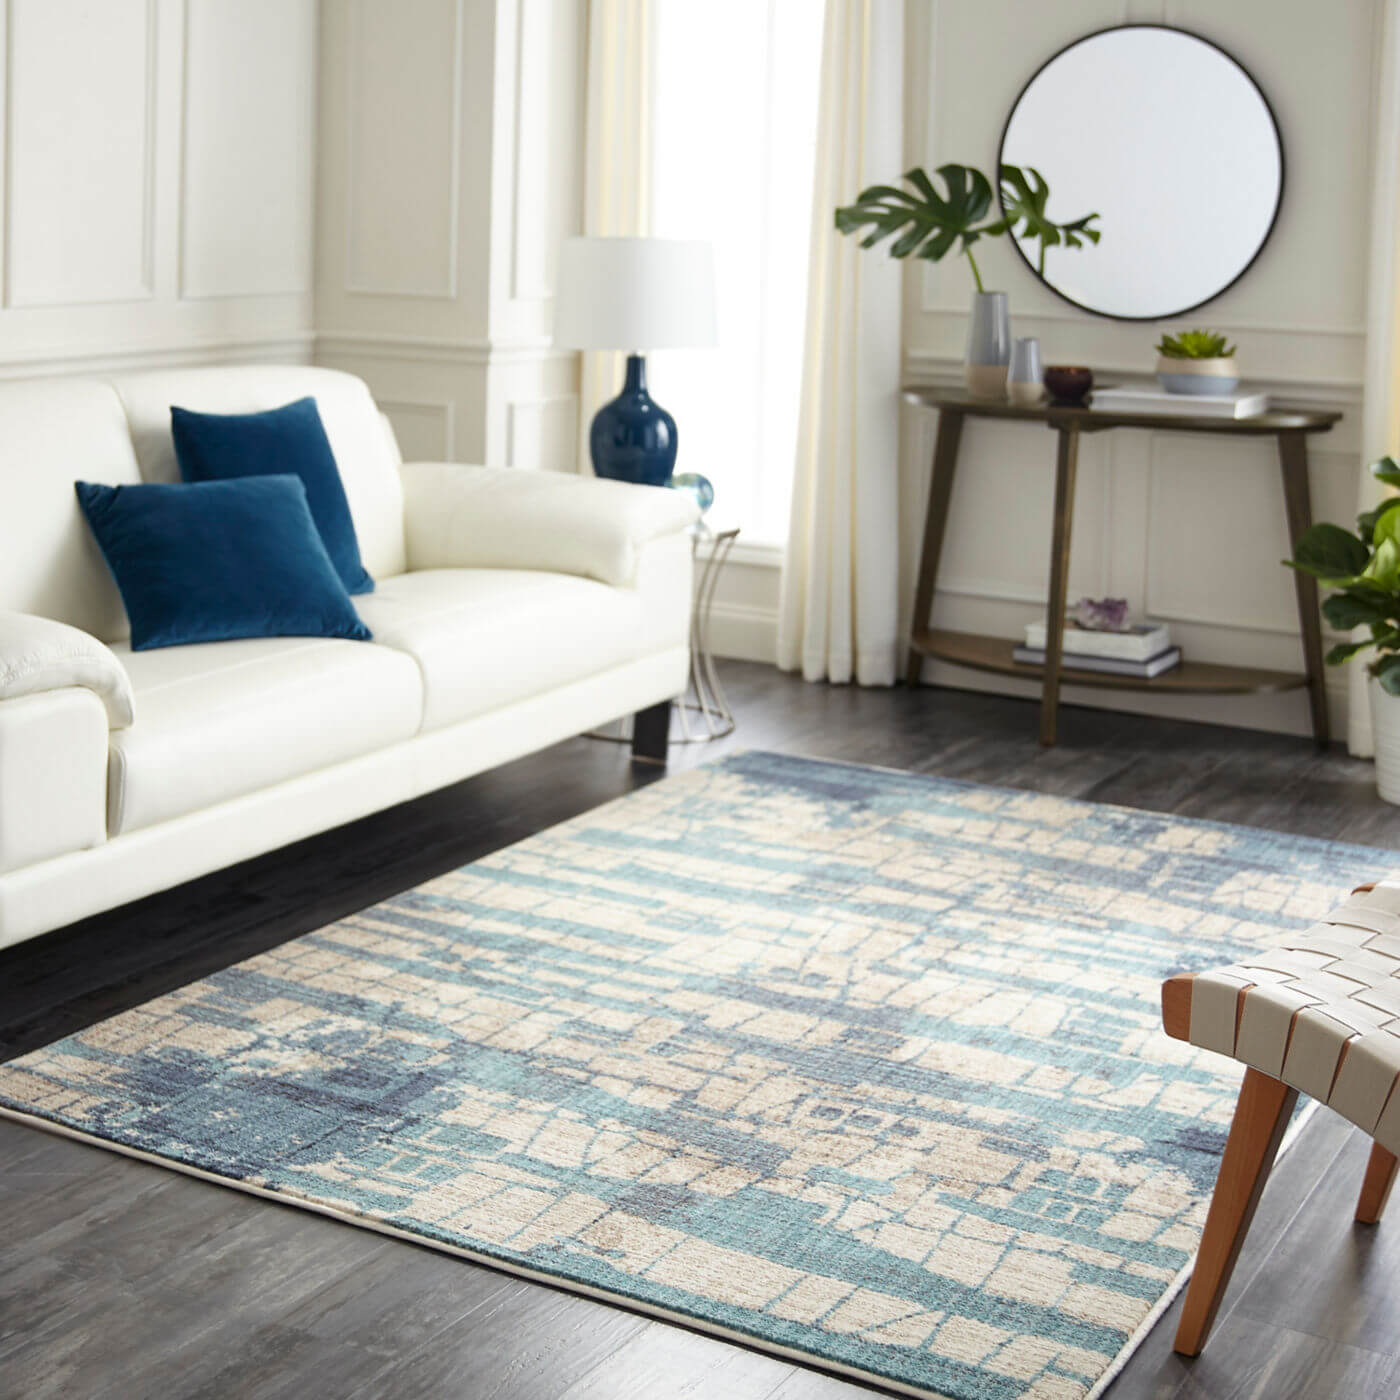 Karastan rug | The Flooring Center